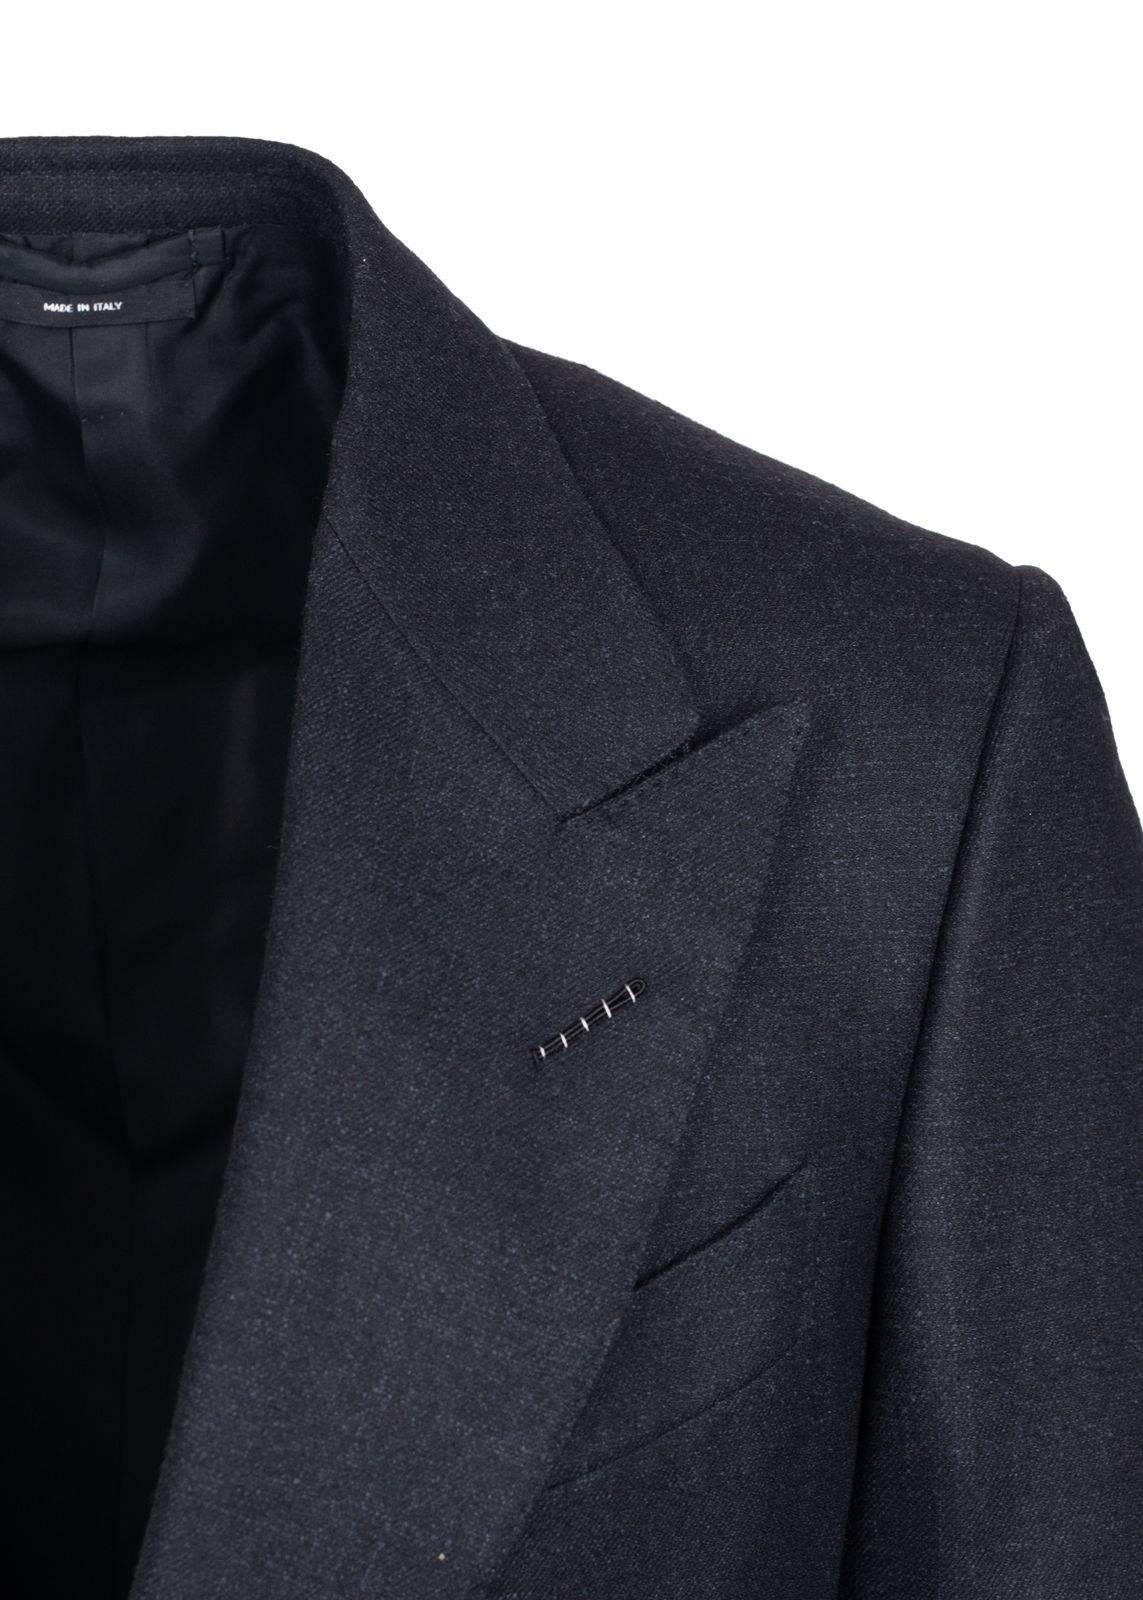 New Tom Ford Men's 100% Wool Shelton Sports Coat Jacket Blazer 48R/38R ret $3750 For Sale 1